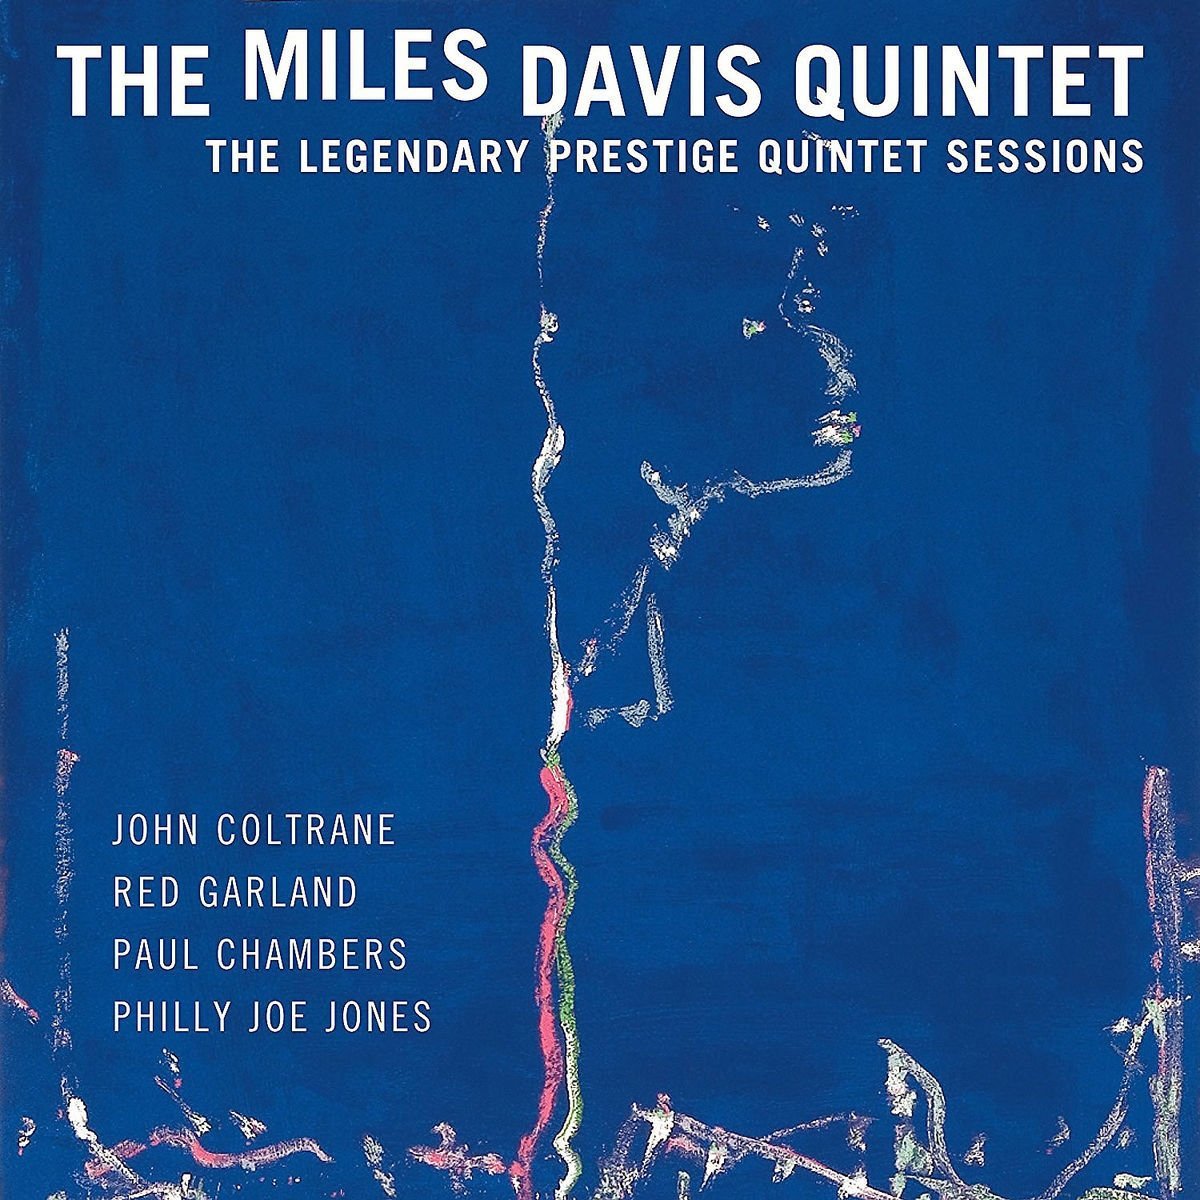 The Miles Davis Quintet: The Legendary Prestige Quintet Sessions